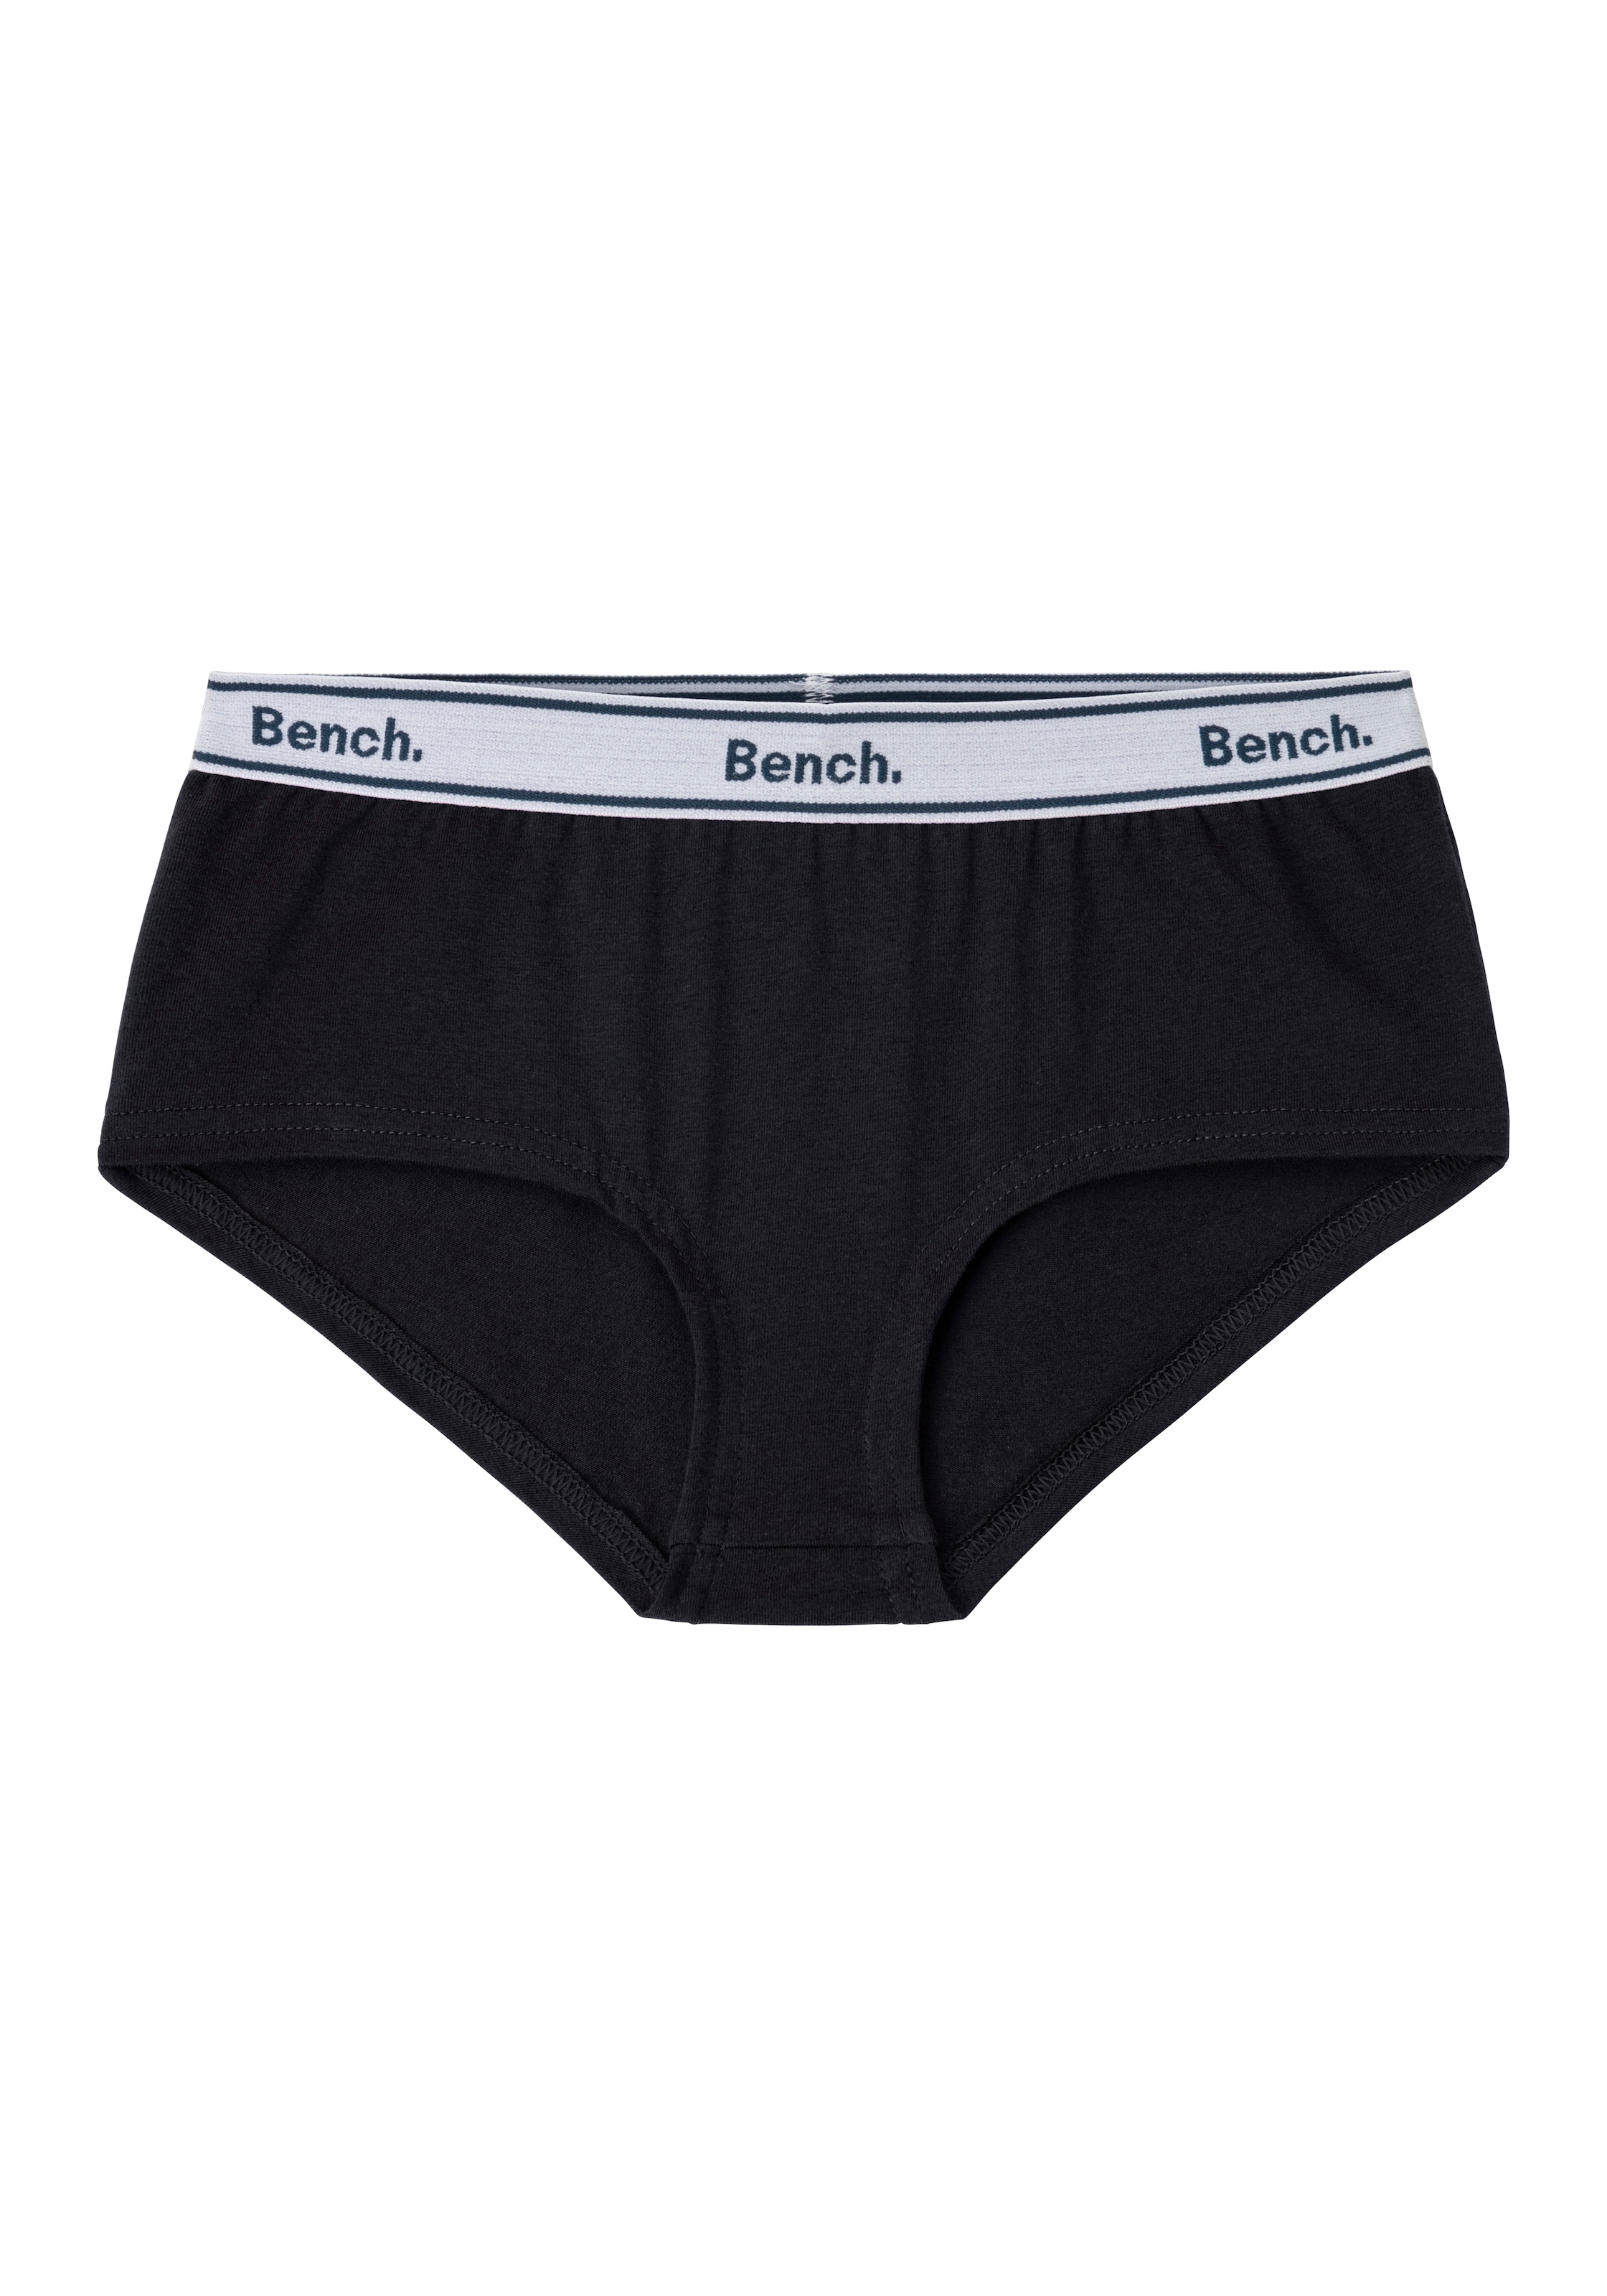 Bench. Panty, acheter Logo (Packung, 3 St.), Webbund mit